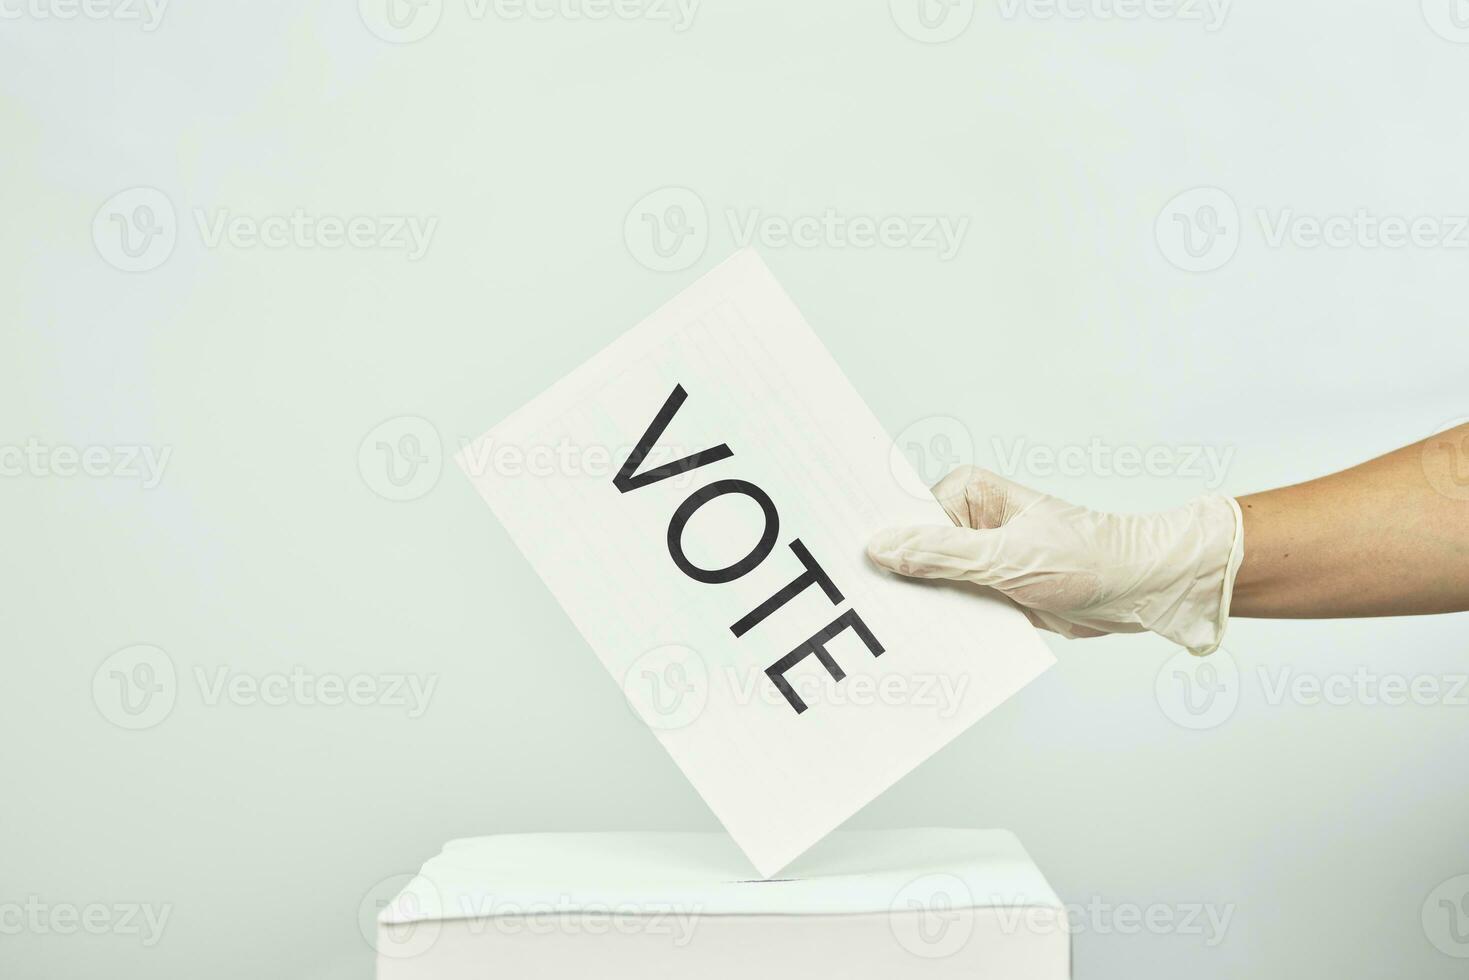 verkiezingen gedurende covid19. coronavirus en verkiezingen of referenda foto